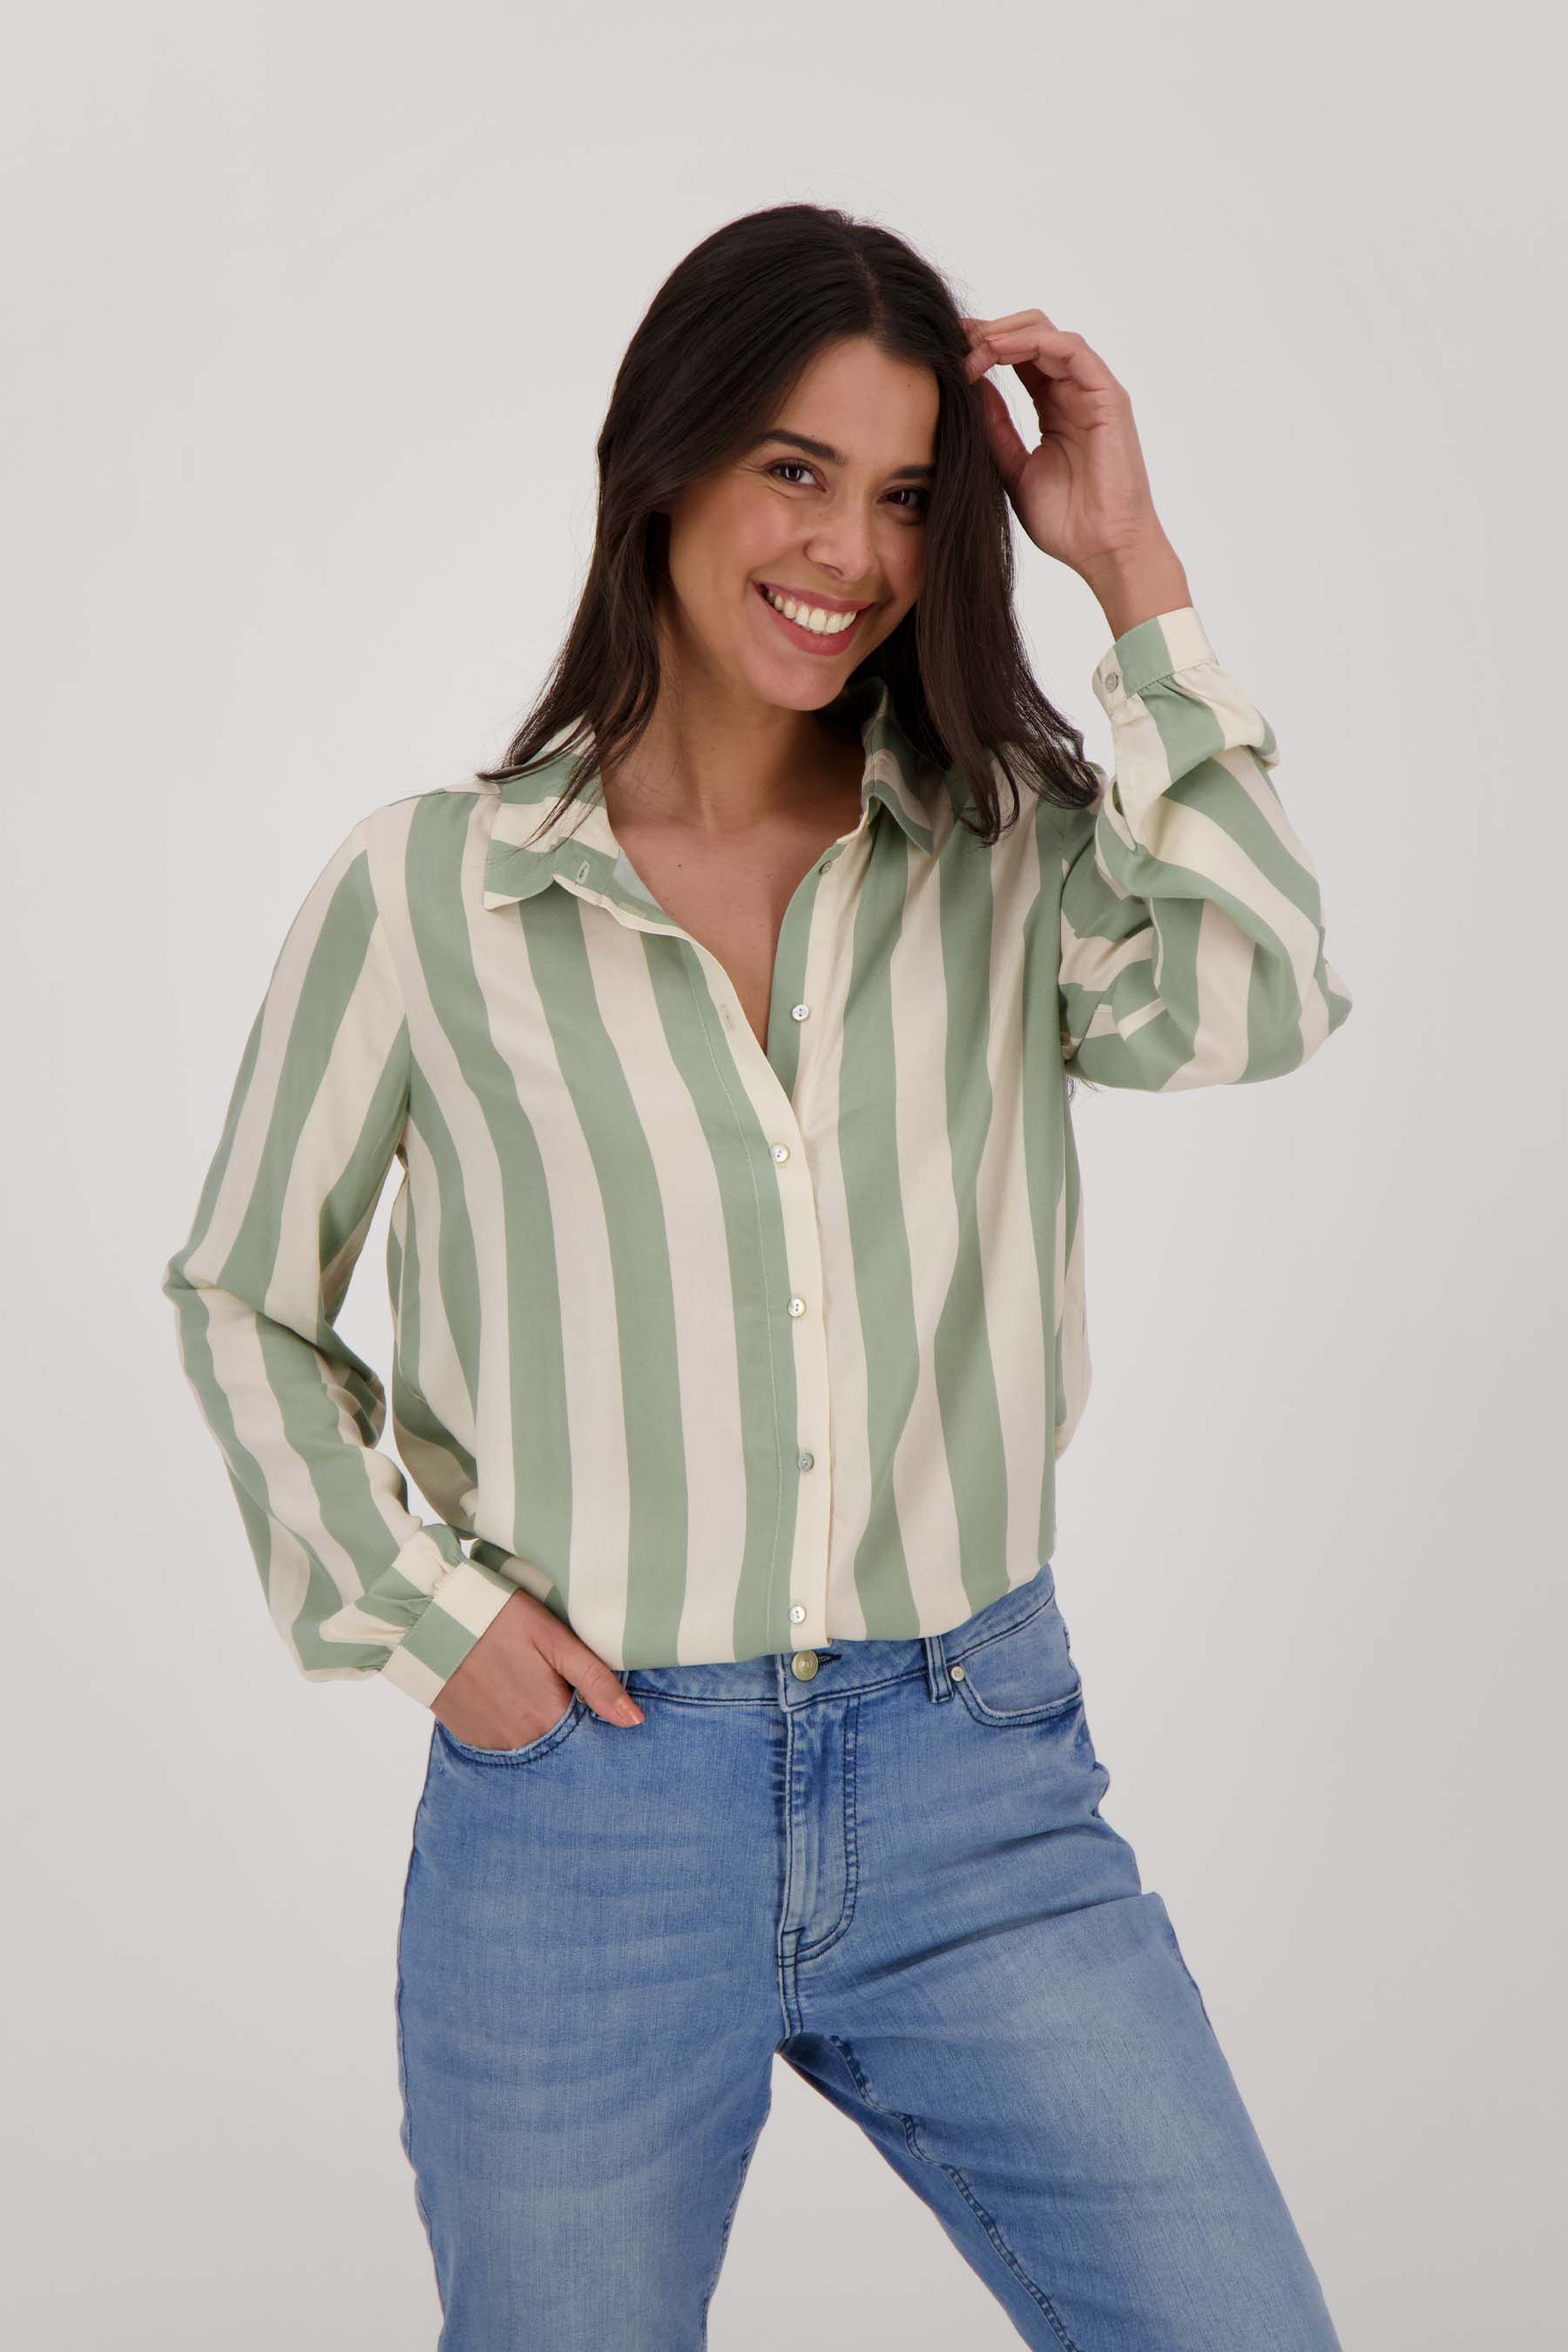 oversized blouse met streep saliegroen/ecru